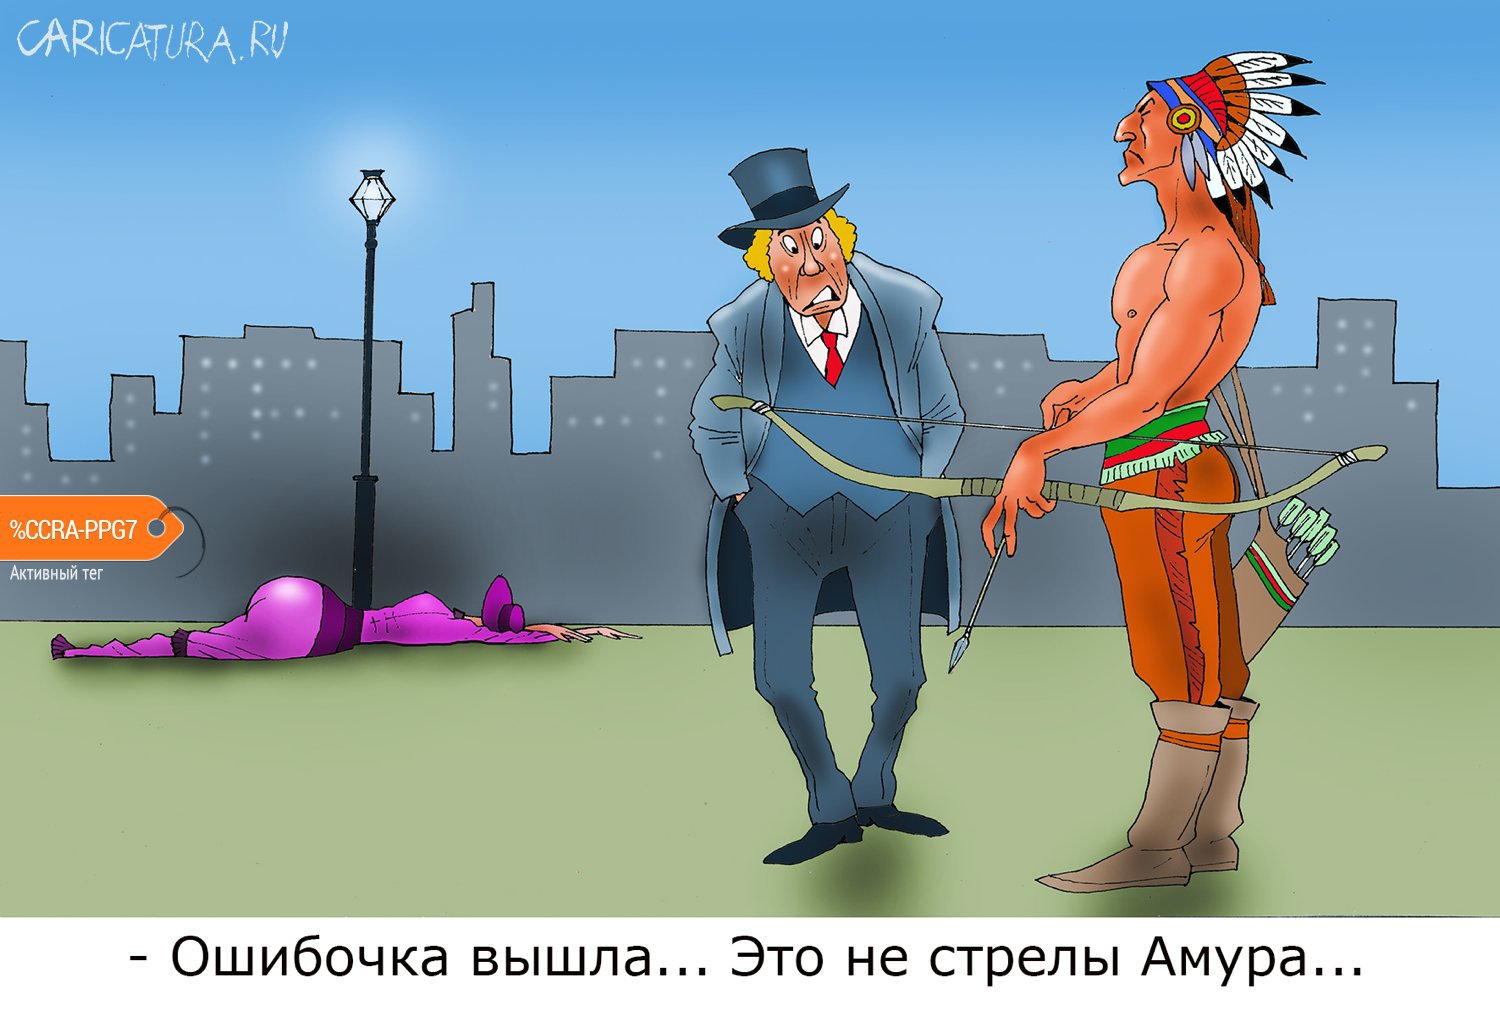 Карикатура "Накладка вышла...", Александр Попов